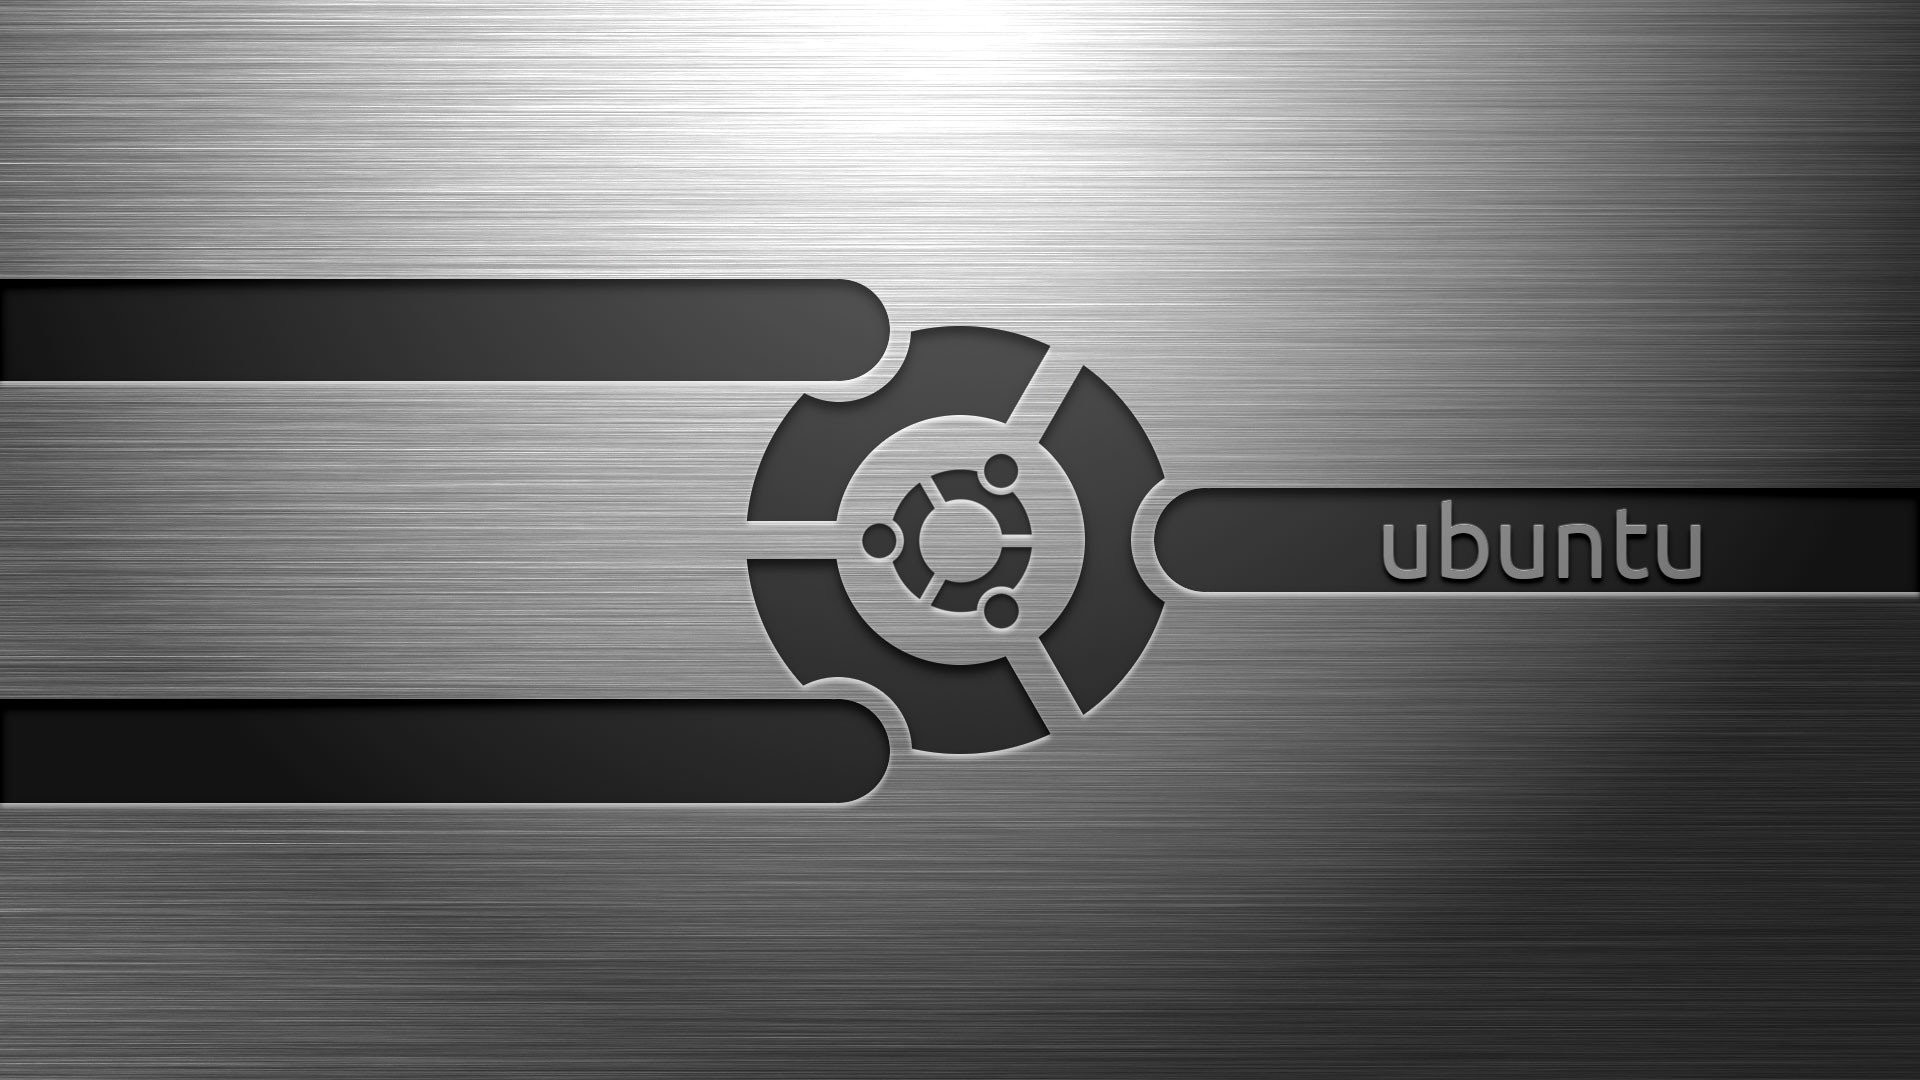 sfondo scuro di ubuntu,font,grafica